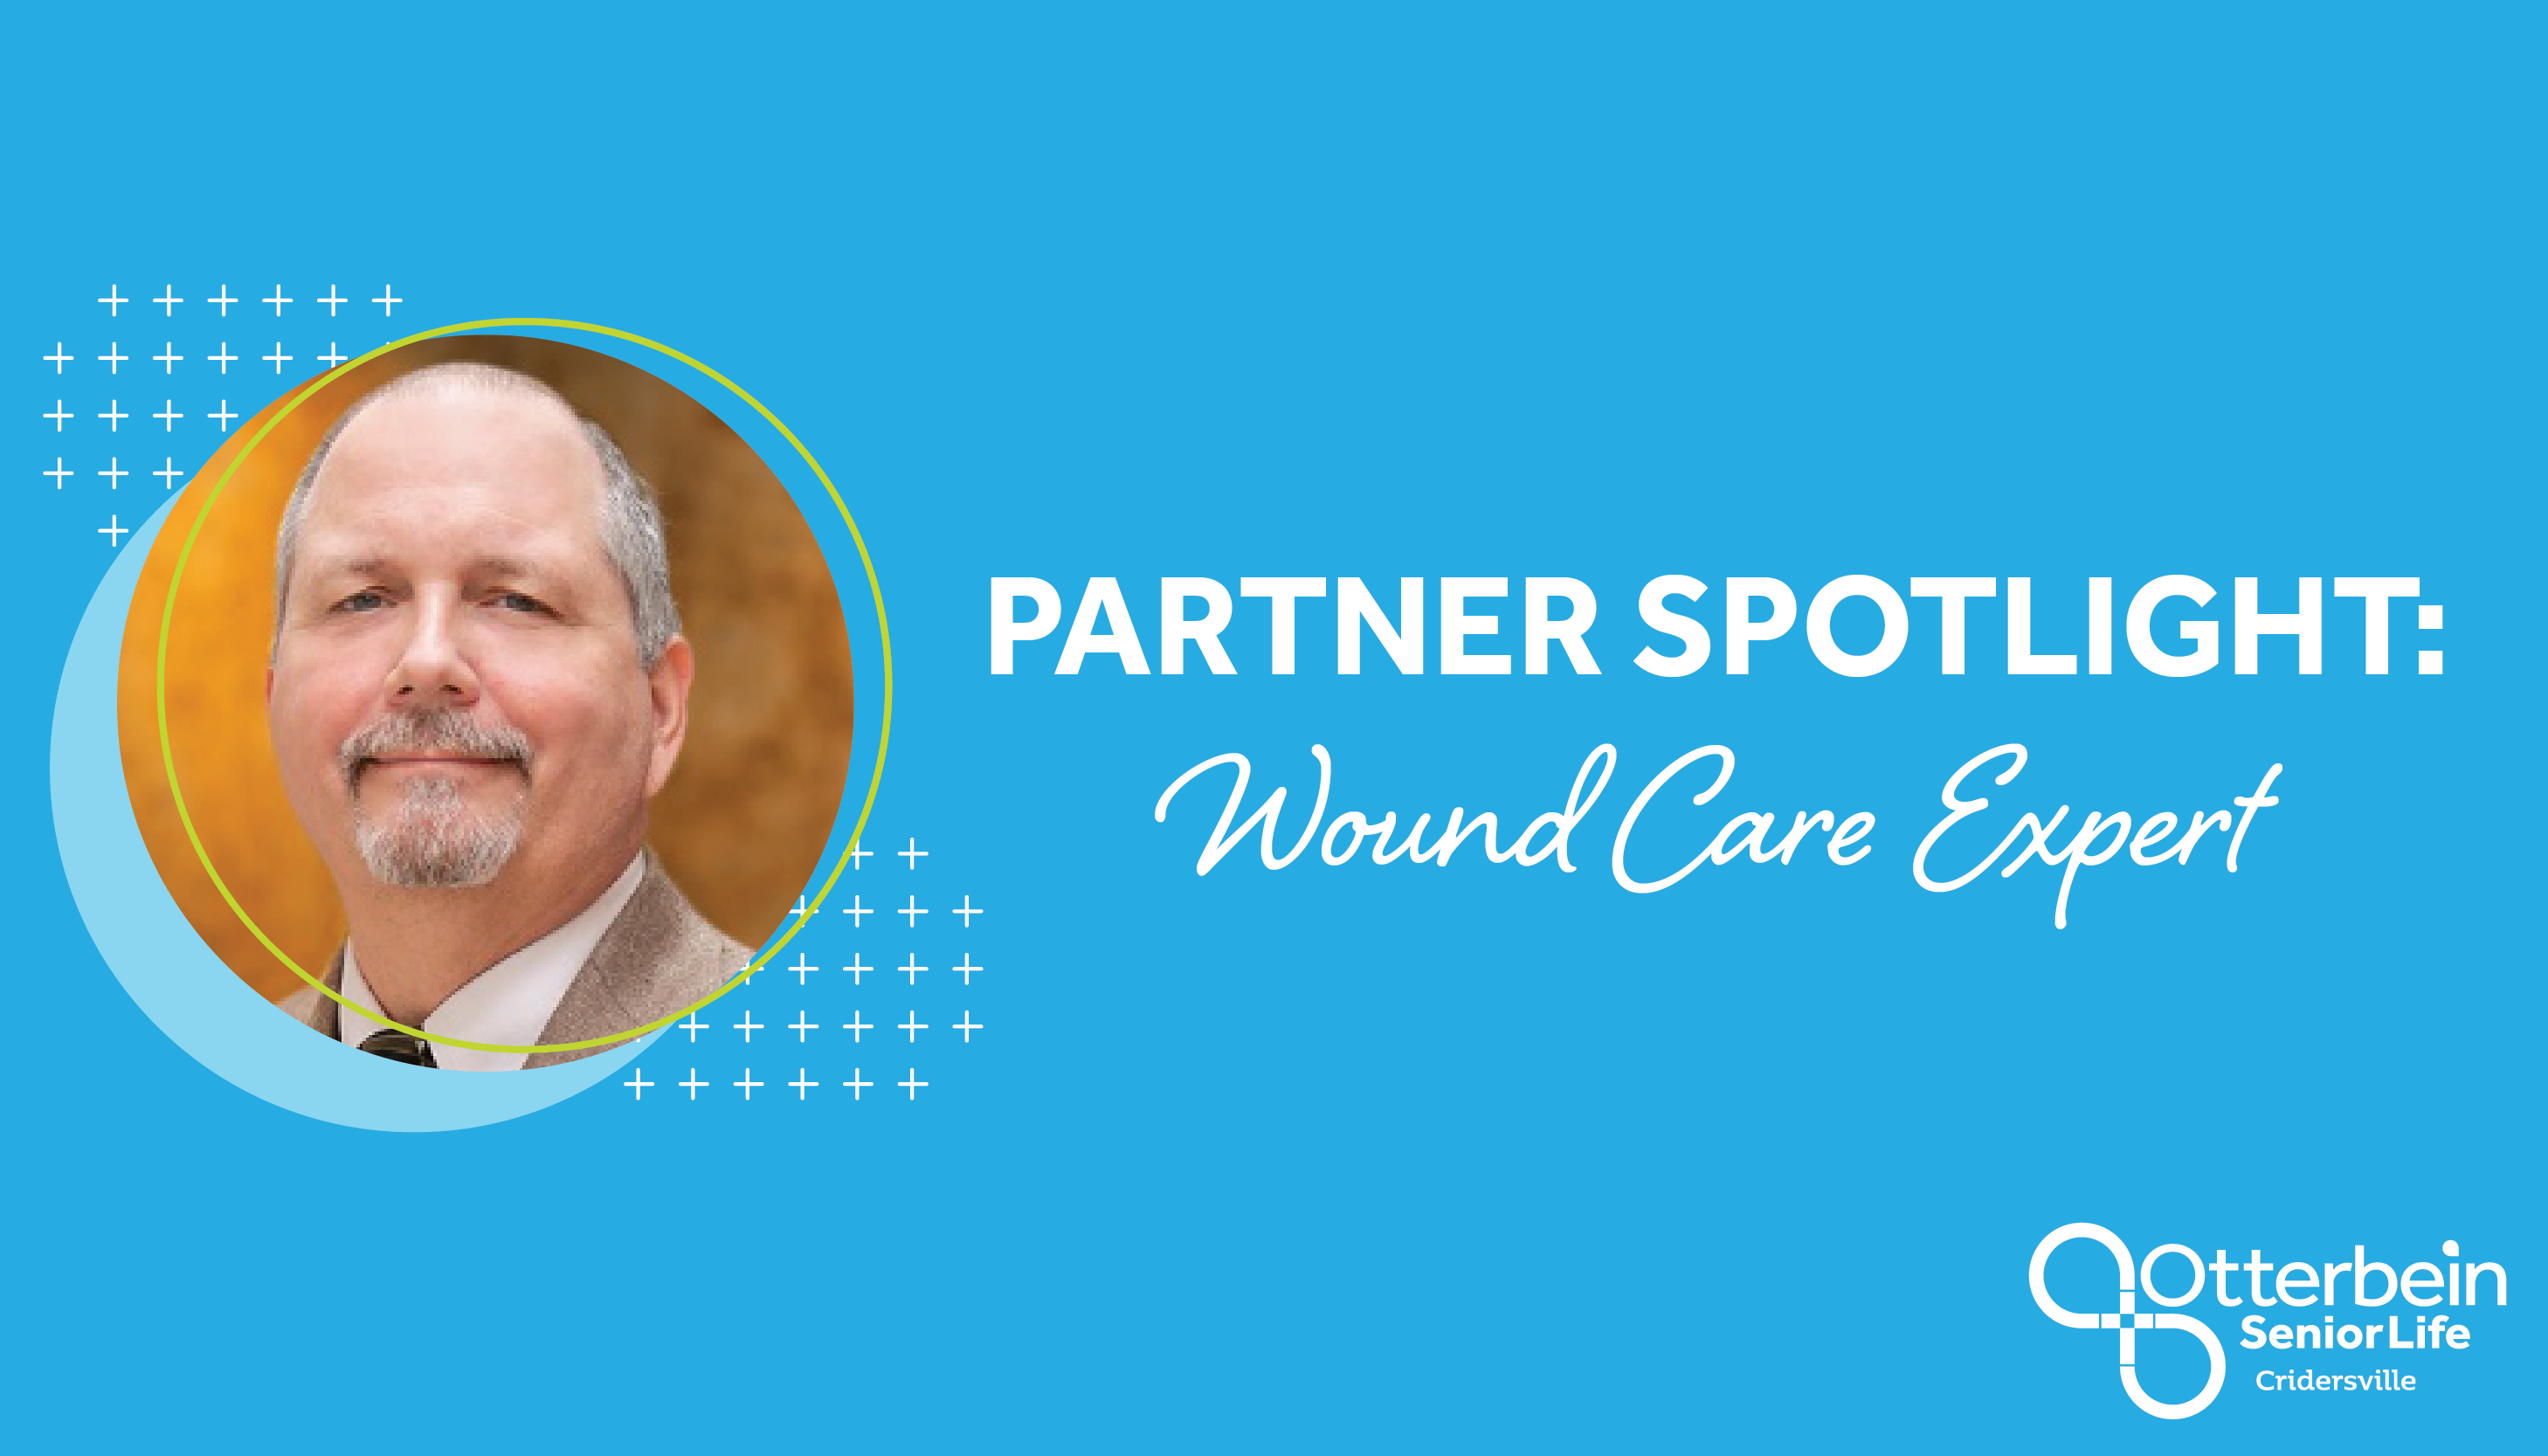 Partner Spotlight: Wound Care Expert Dr. Scott Wilcher